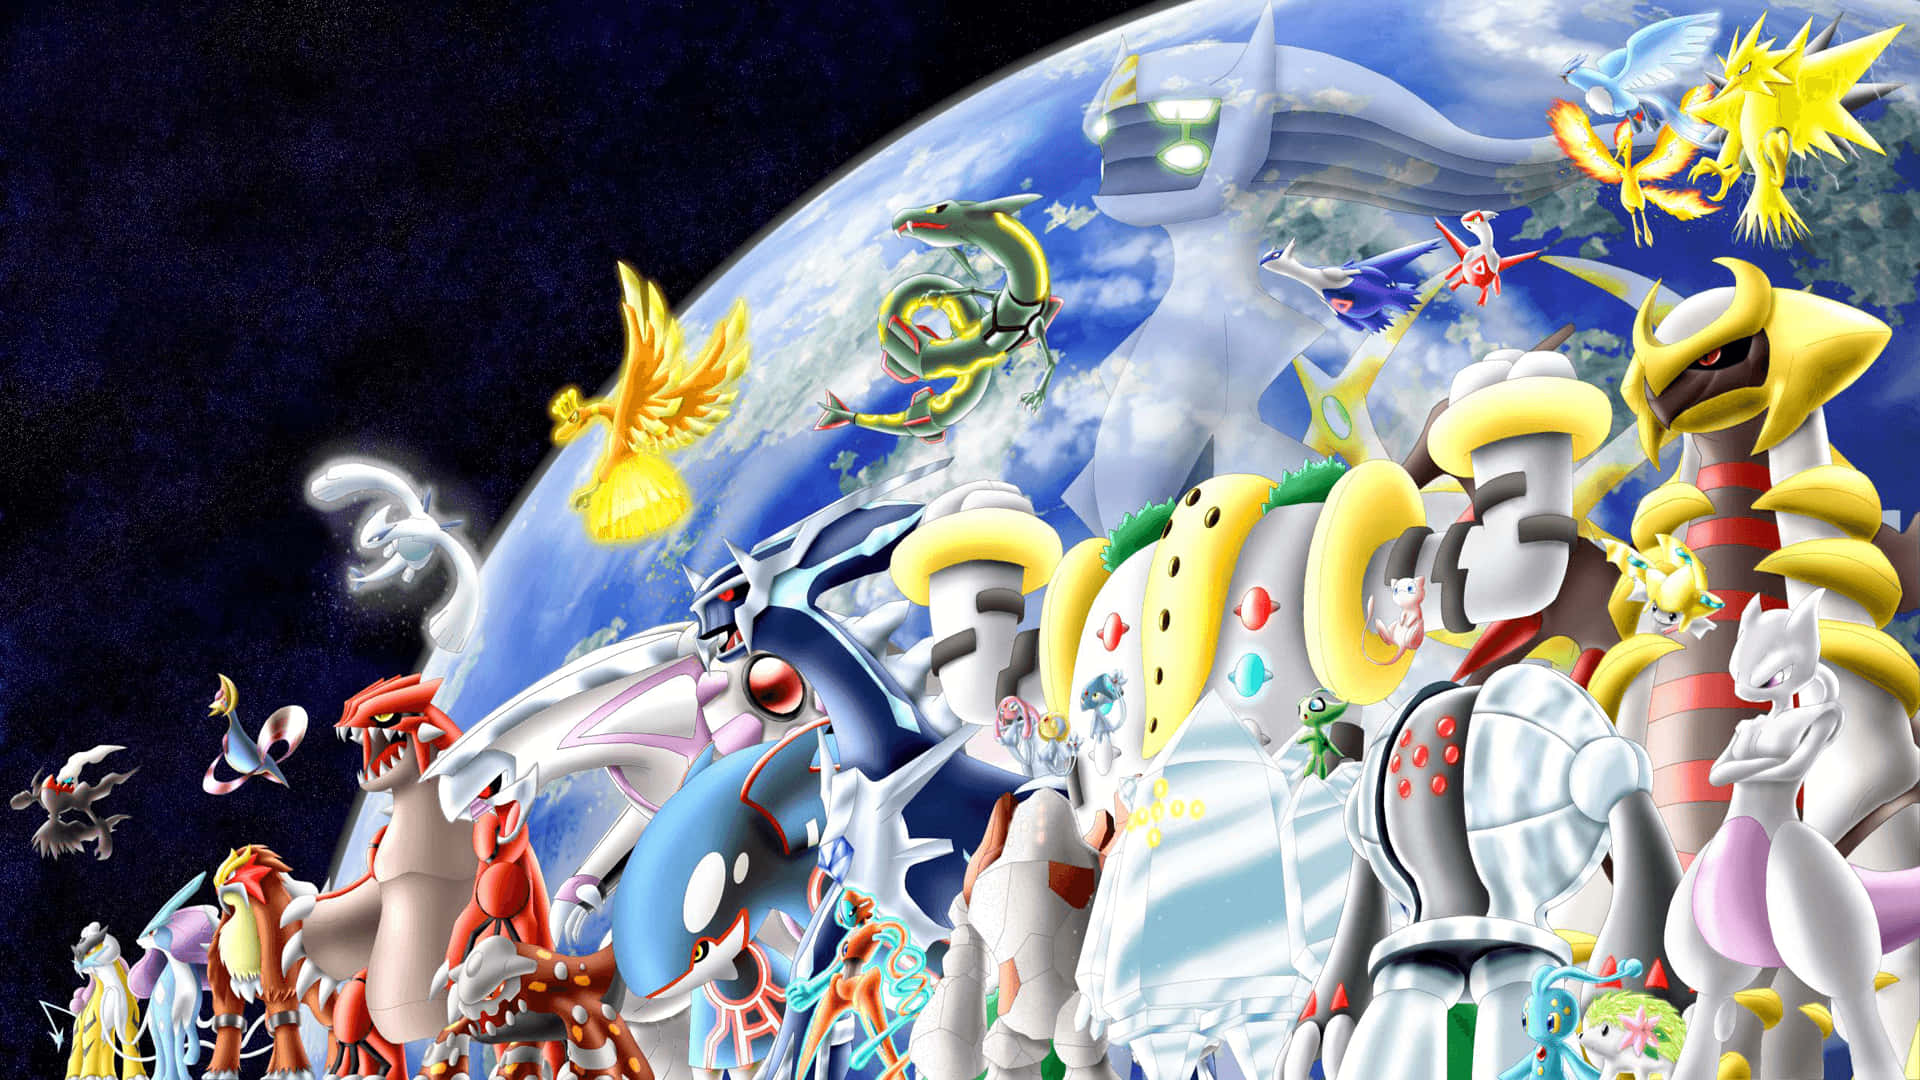 Imagendel Universo De Los Pokémon Legendarios